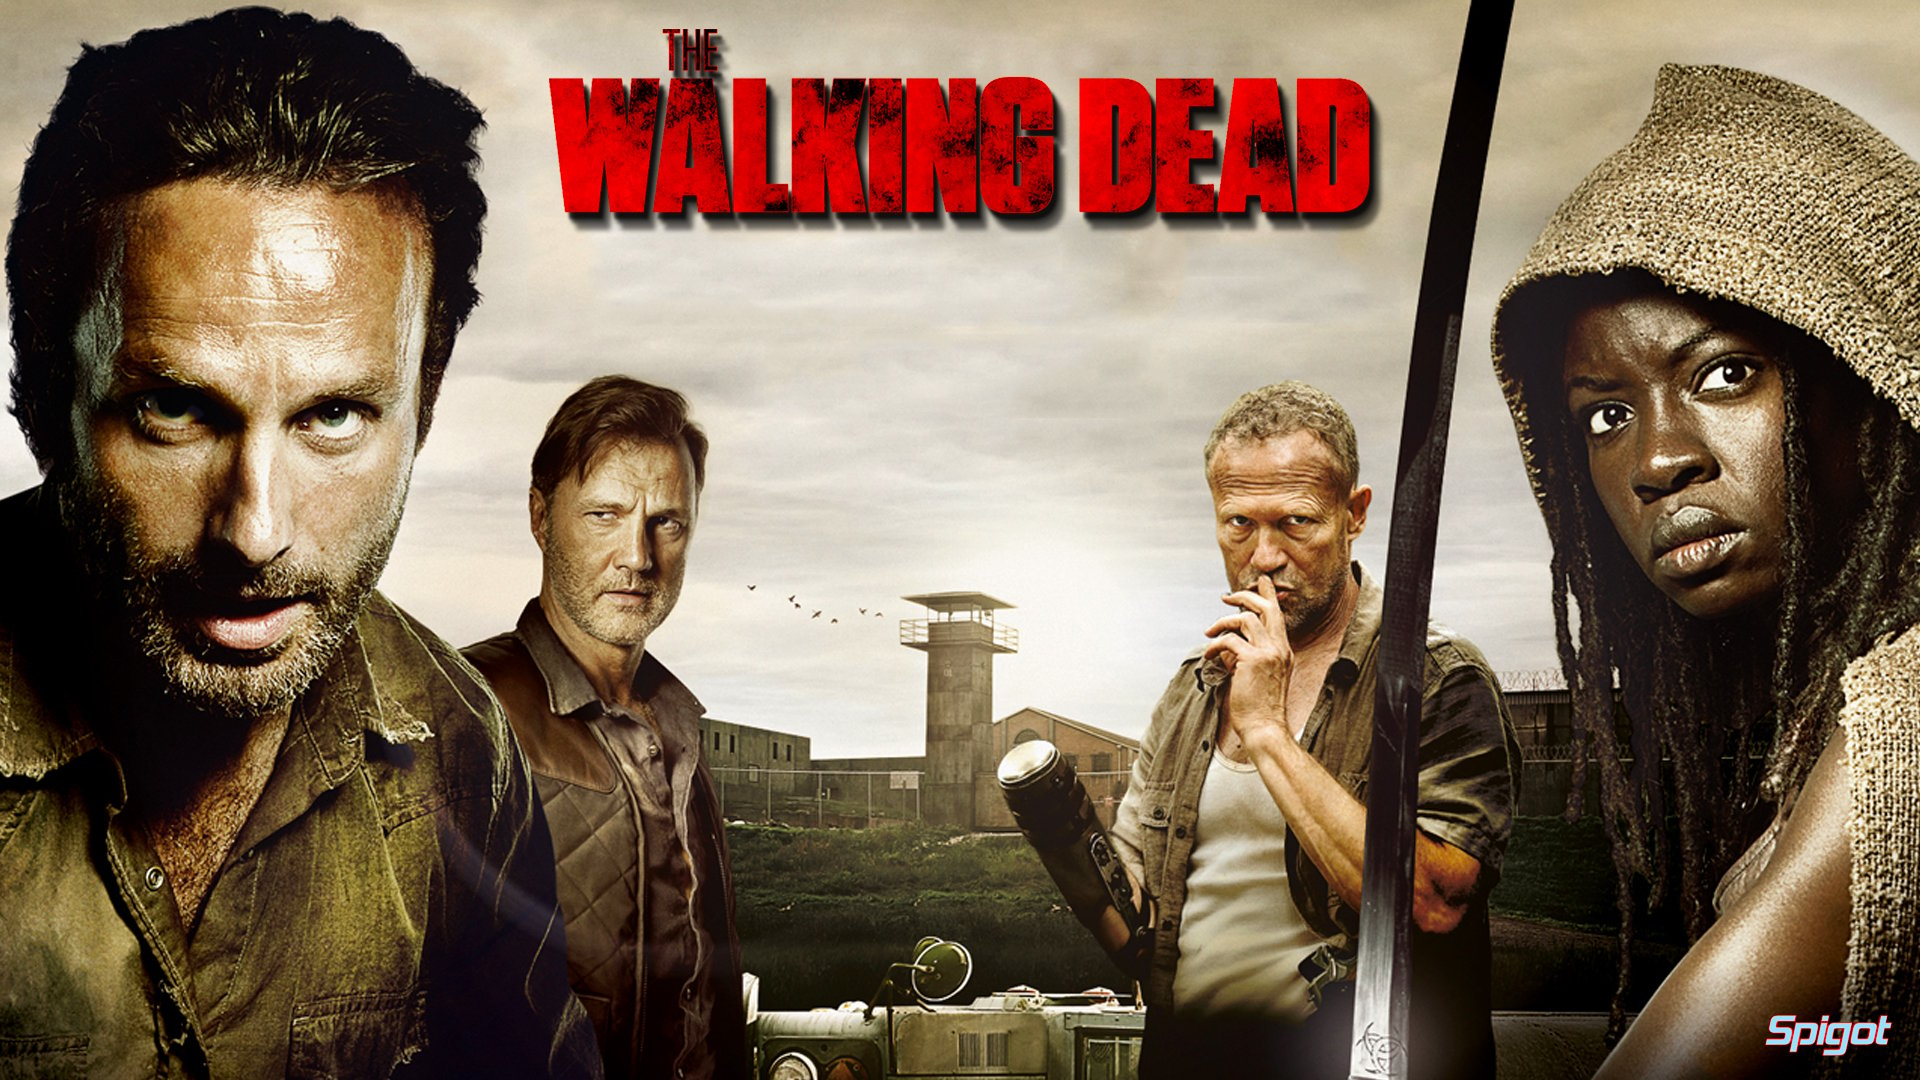 The Walking Dead Season 3. George Spigot's Blog